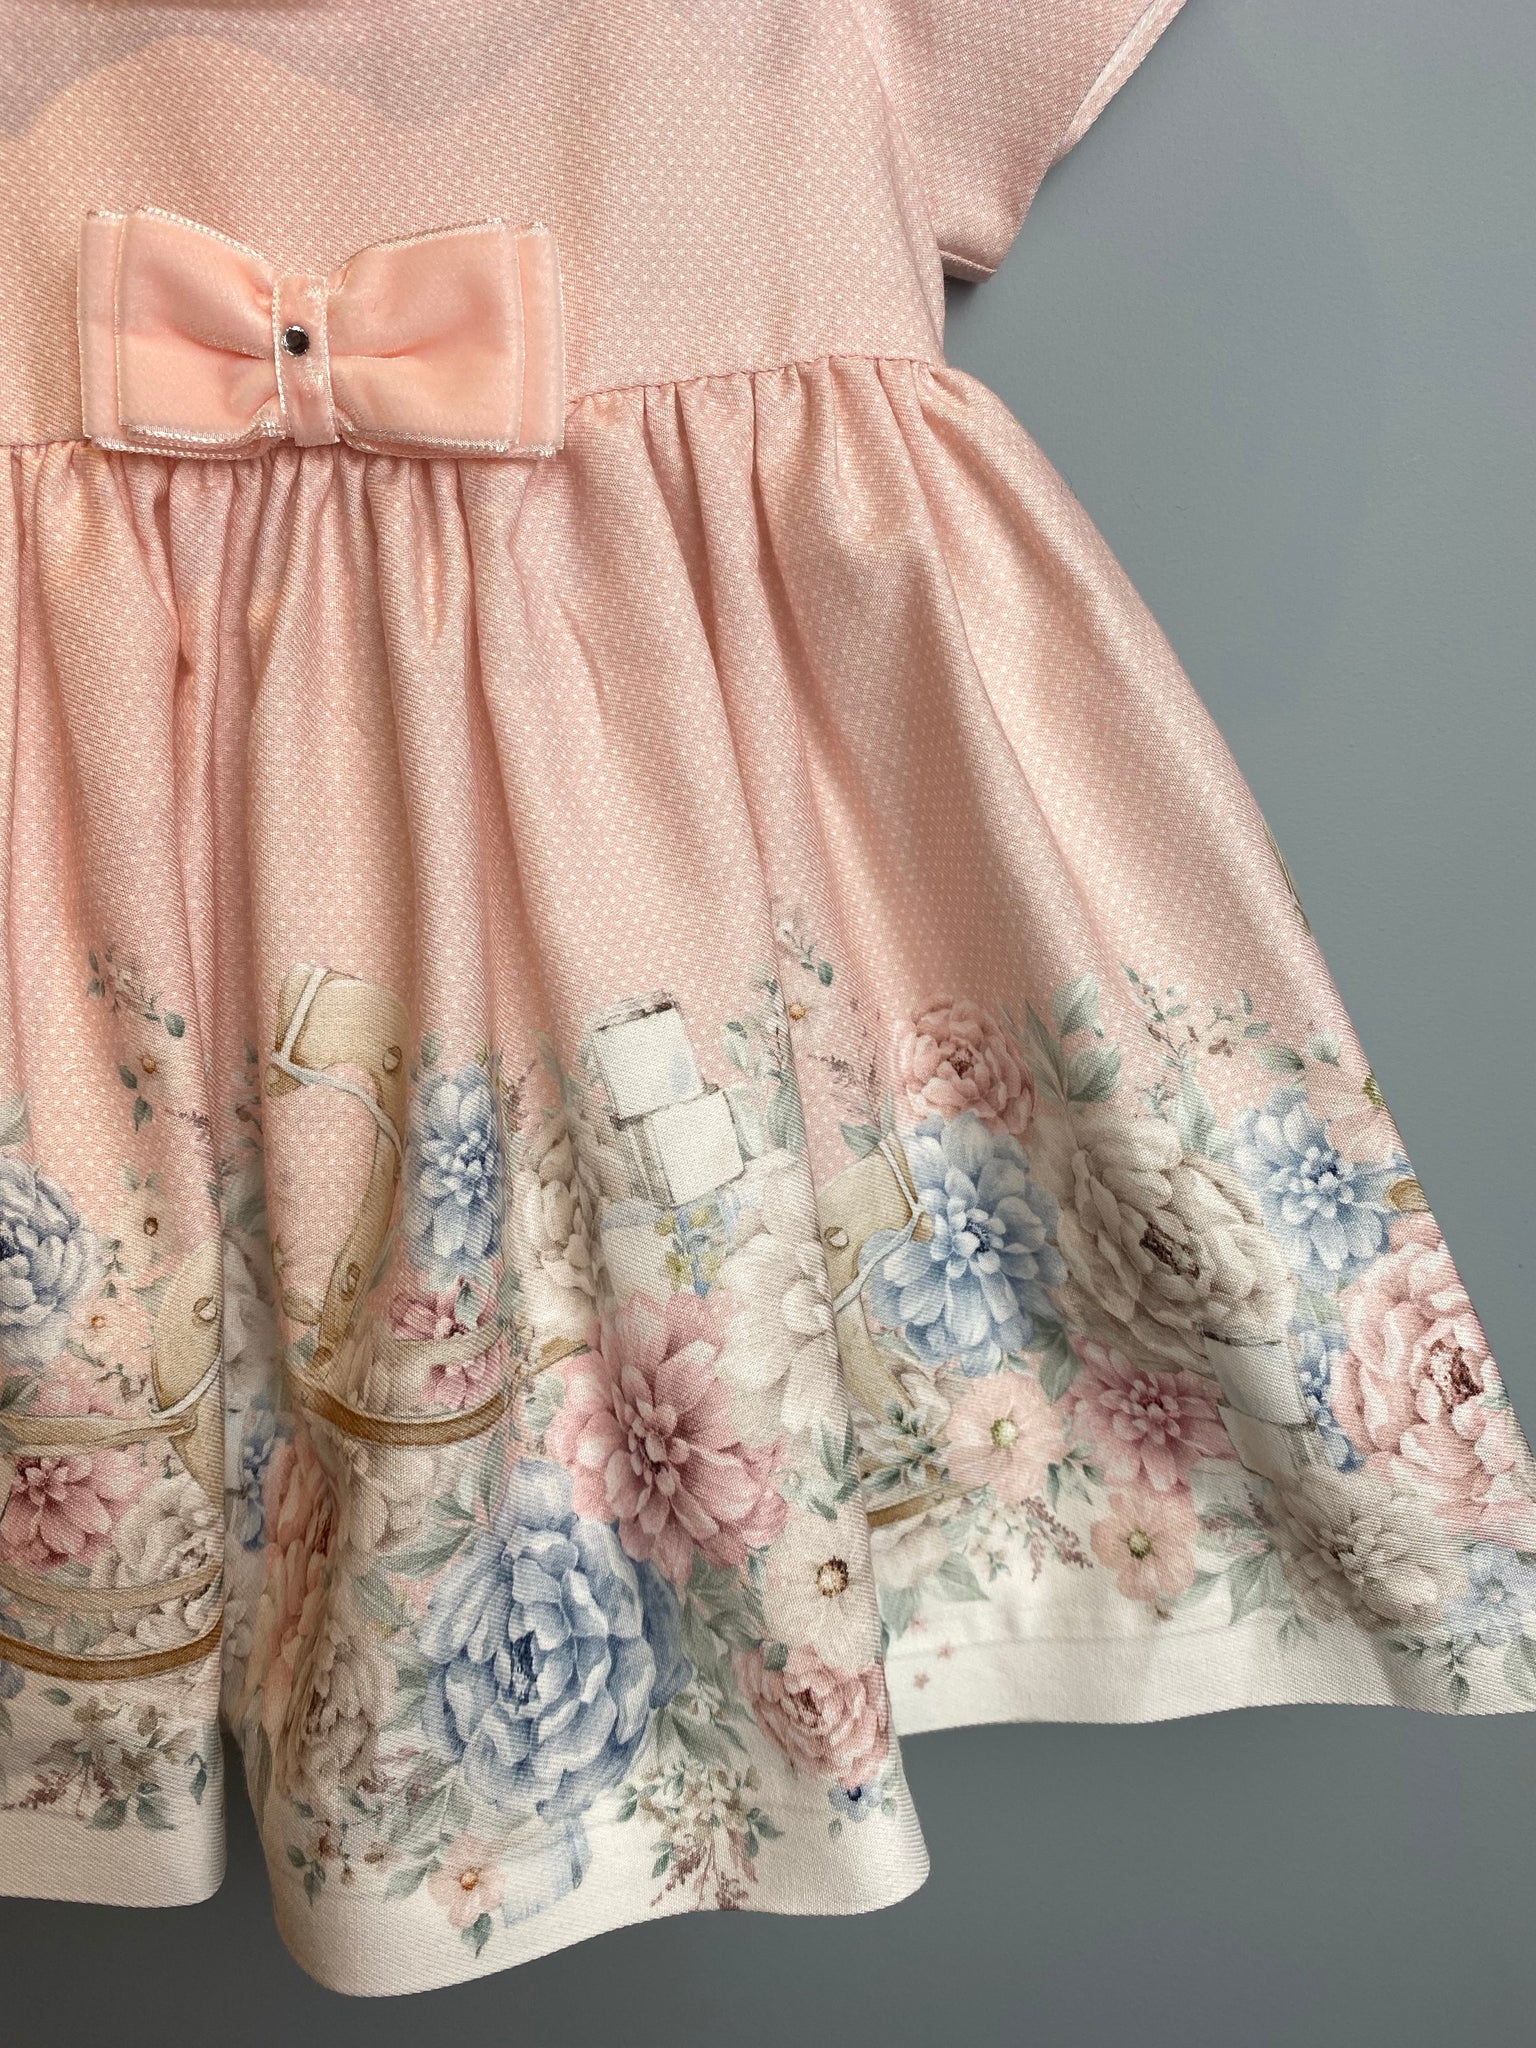 Piccola Speranza Pale Pink Floral Dress